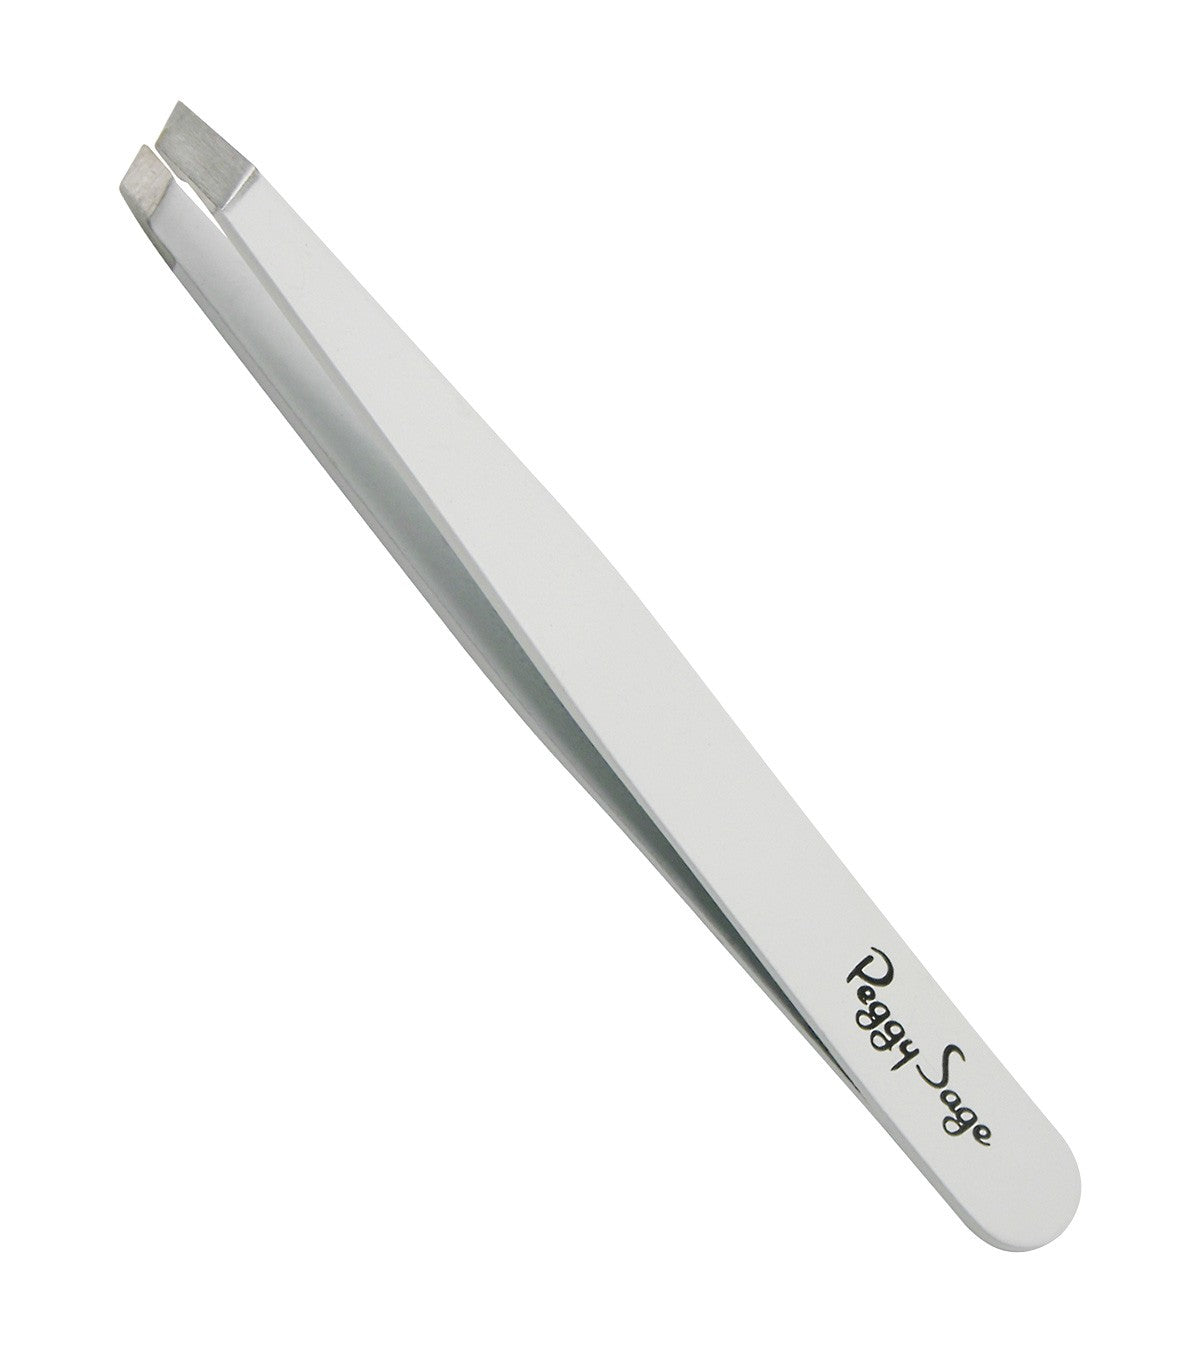 Epilation tweezers - White Ref 300045